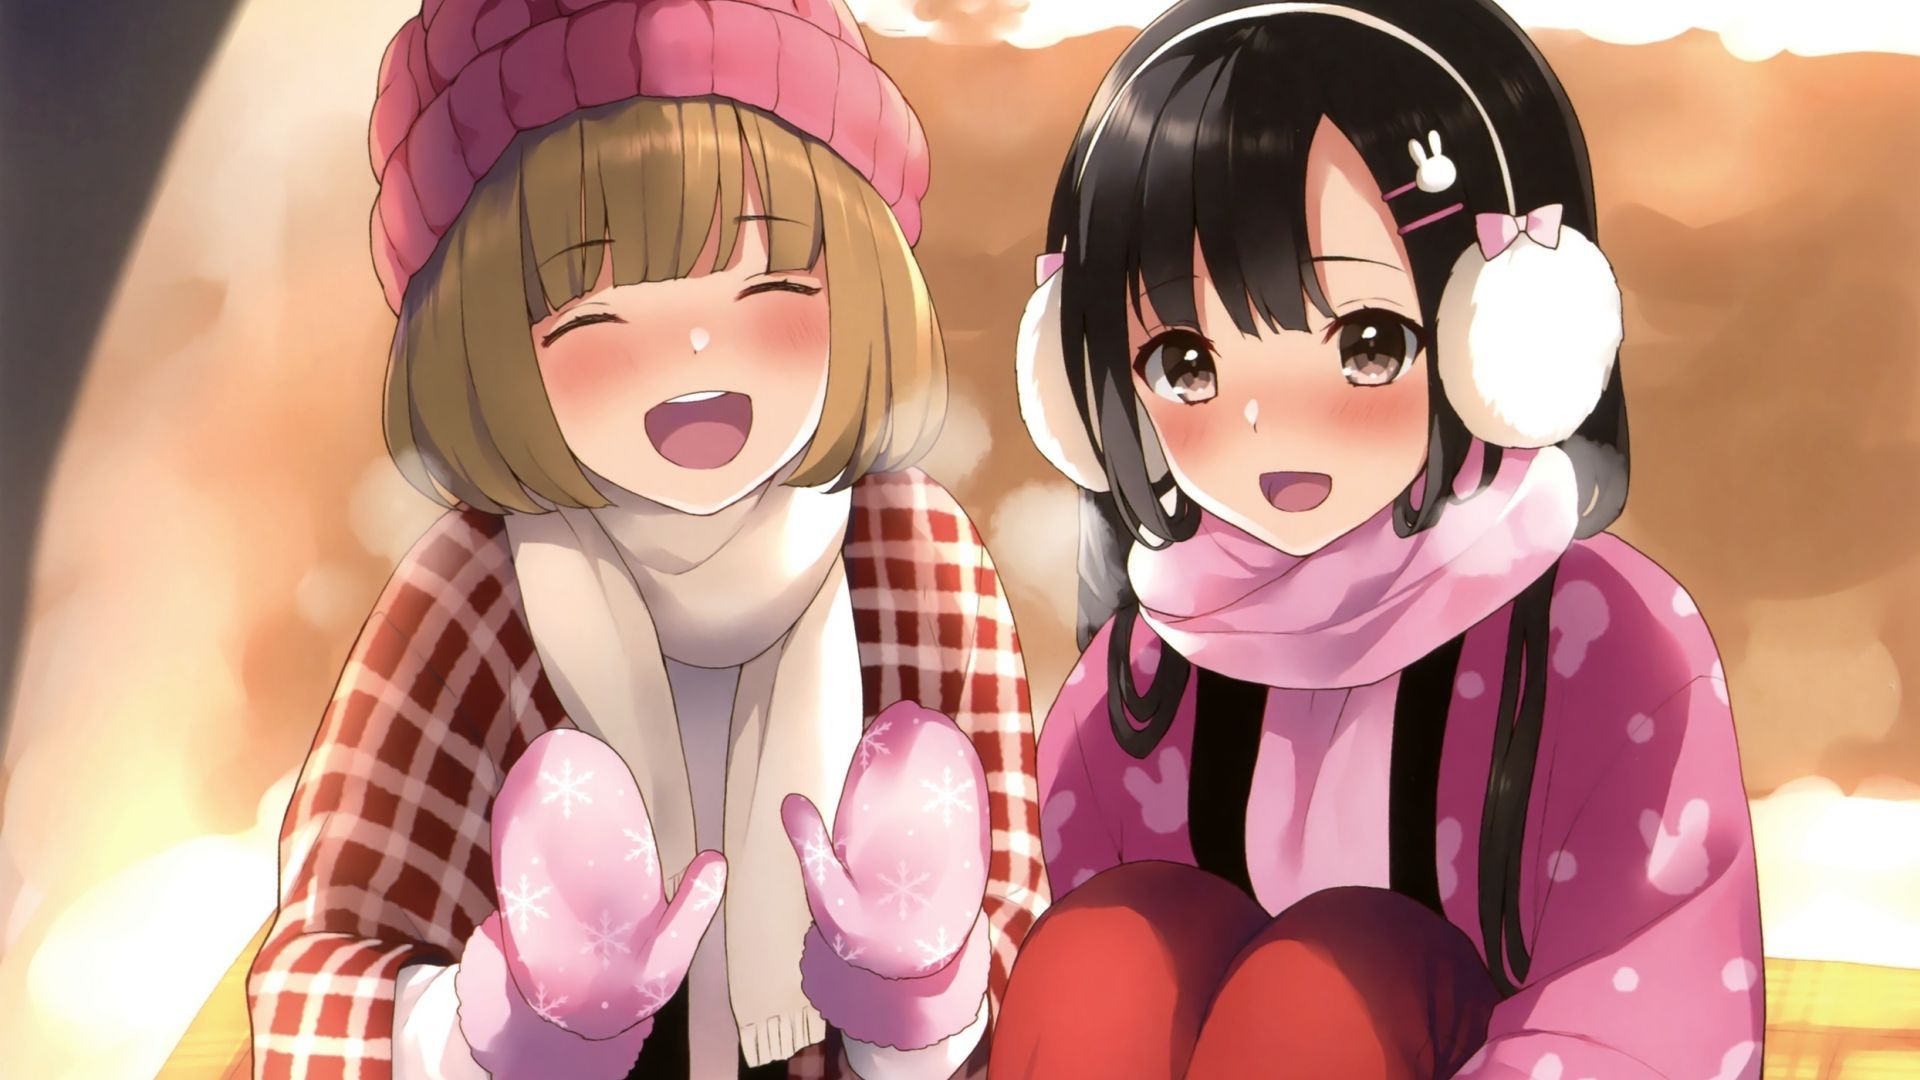 Desktop wallpaper winter, cute anime girls, friends, HD image, picture, background, 69b11f